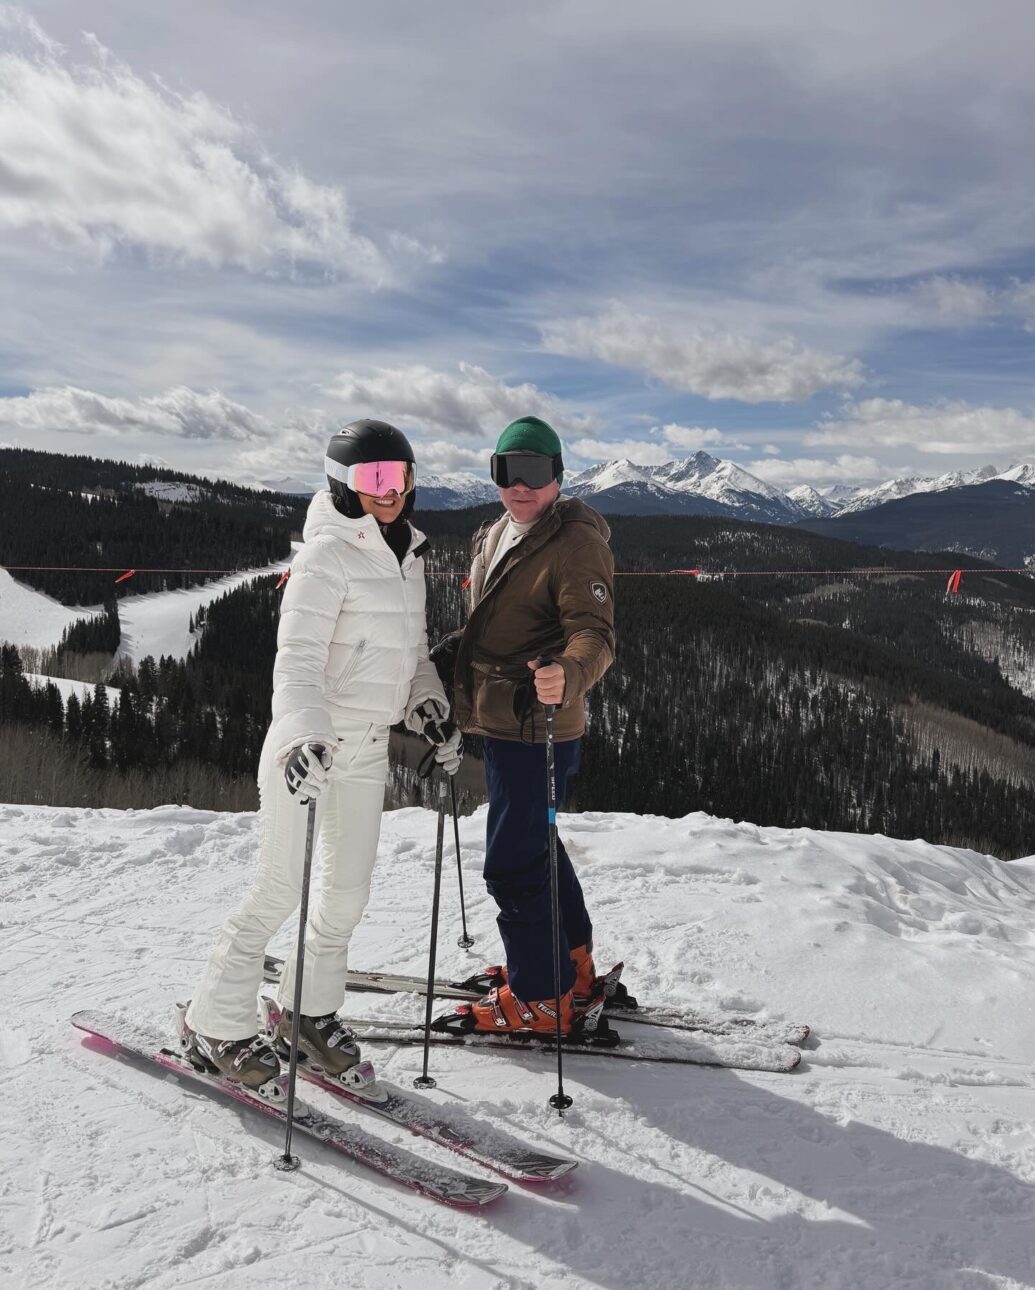 ski trip outfit - white ski pants with a matching puffer jacket, ski gloves, a ski helmet, and ski goggles